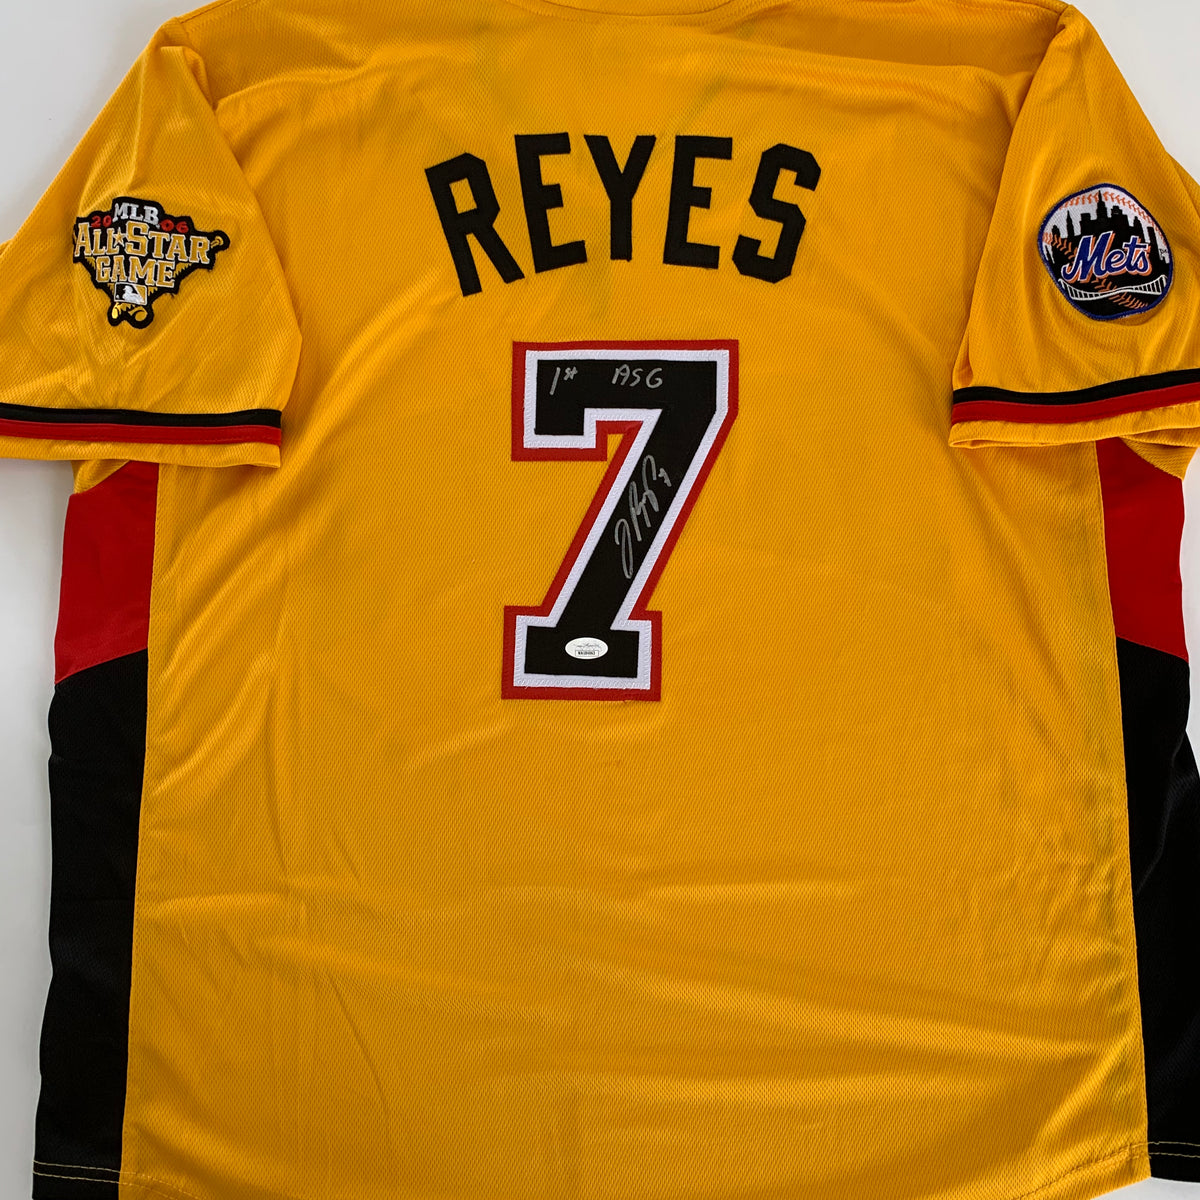 Jose Reyes New York Mets MLB Jerseys for sale